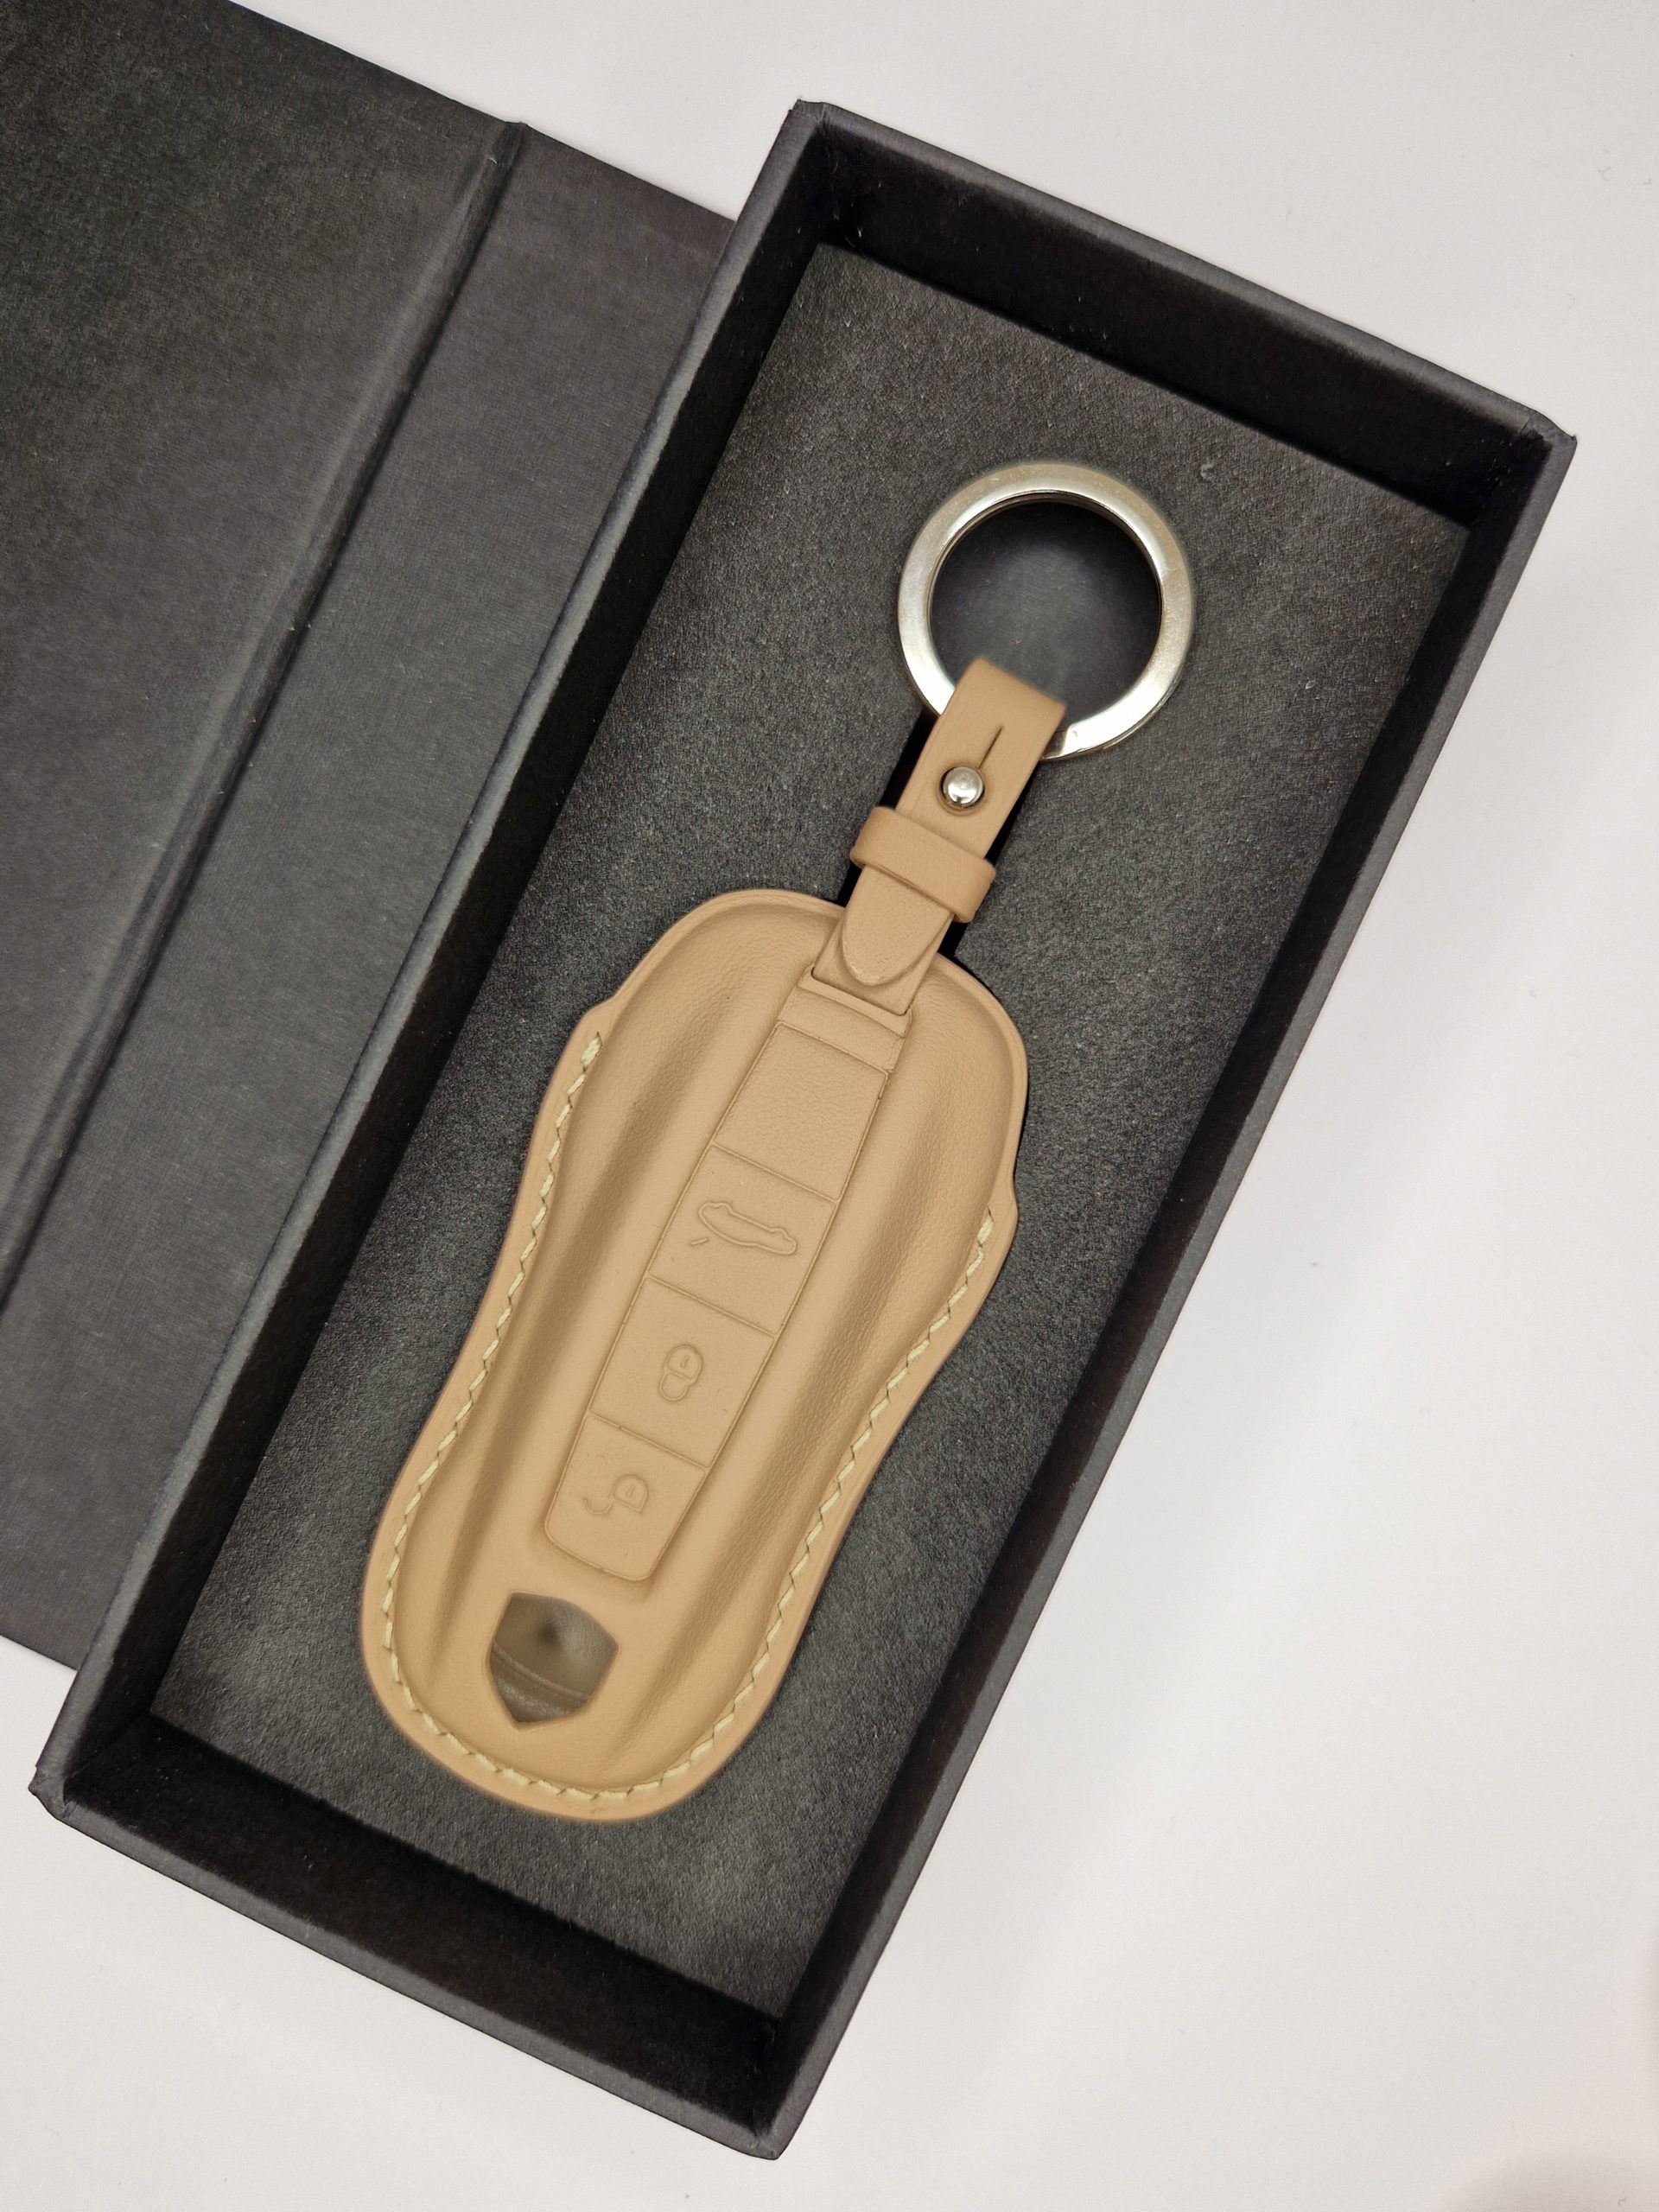 Timotheus for Porsche key fob cover case, Compatible with Porsche key